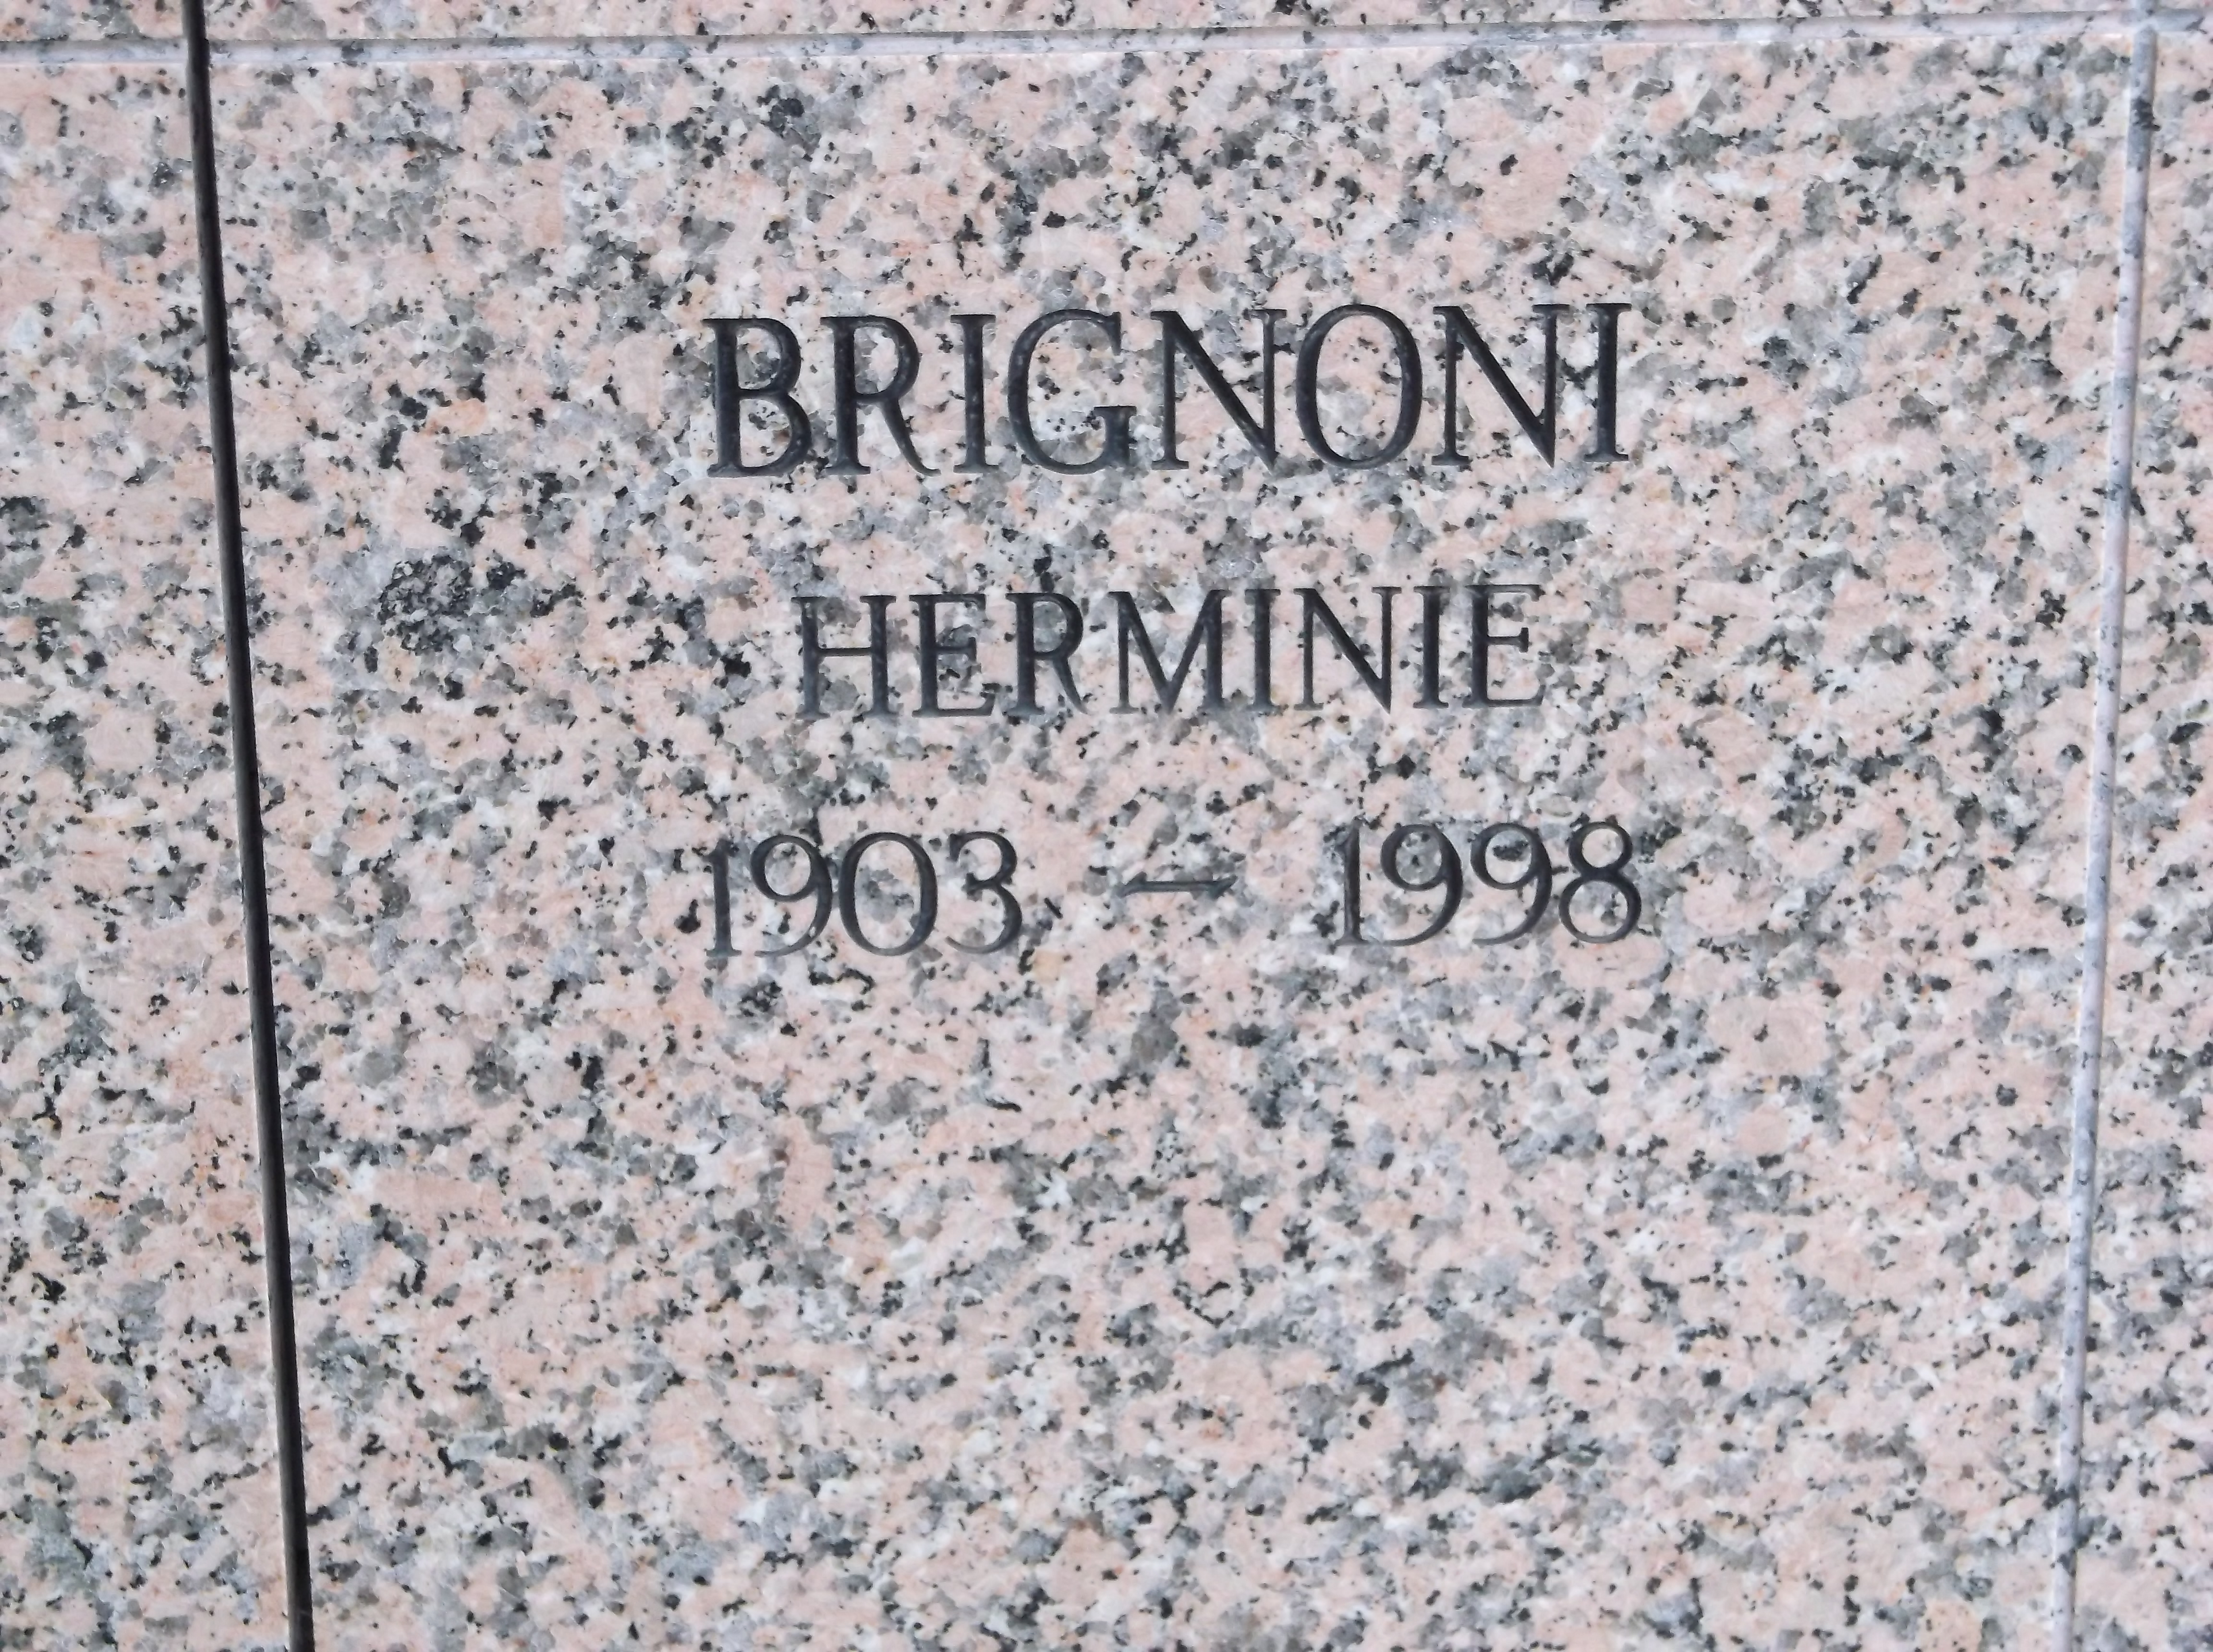 Herminie Brignoni